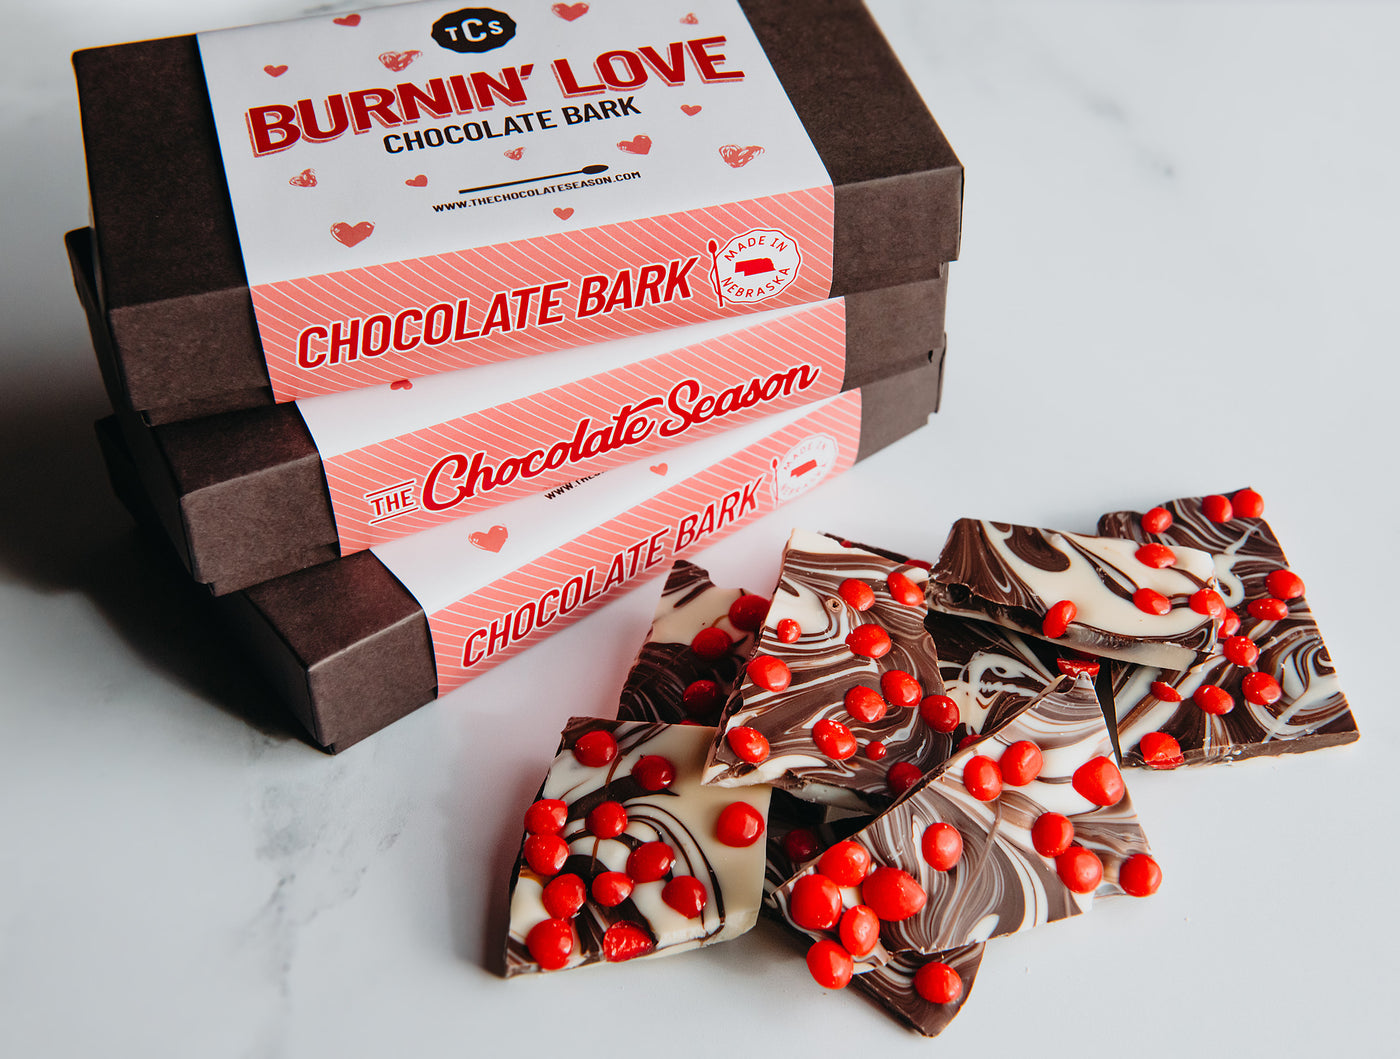 Burnin' Love Chocolate Bark